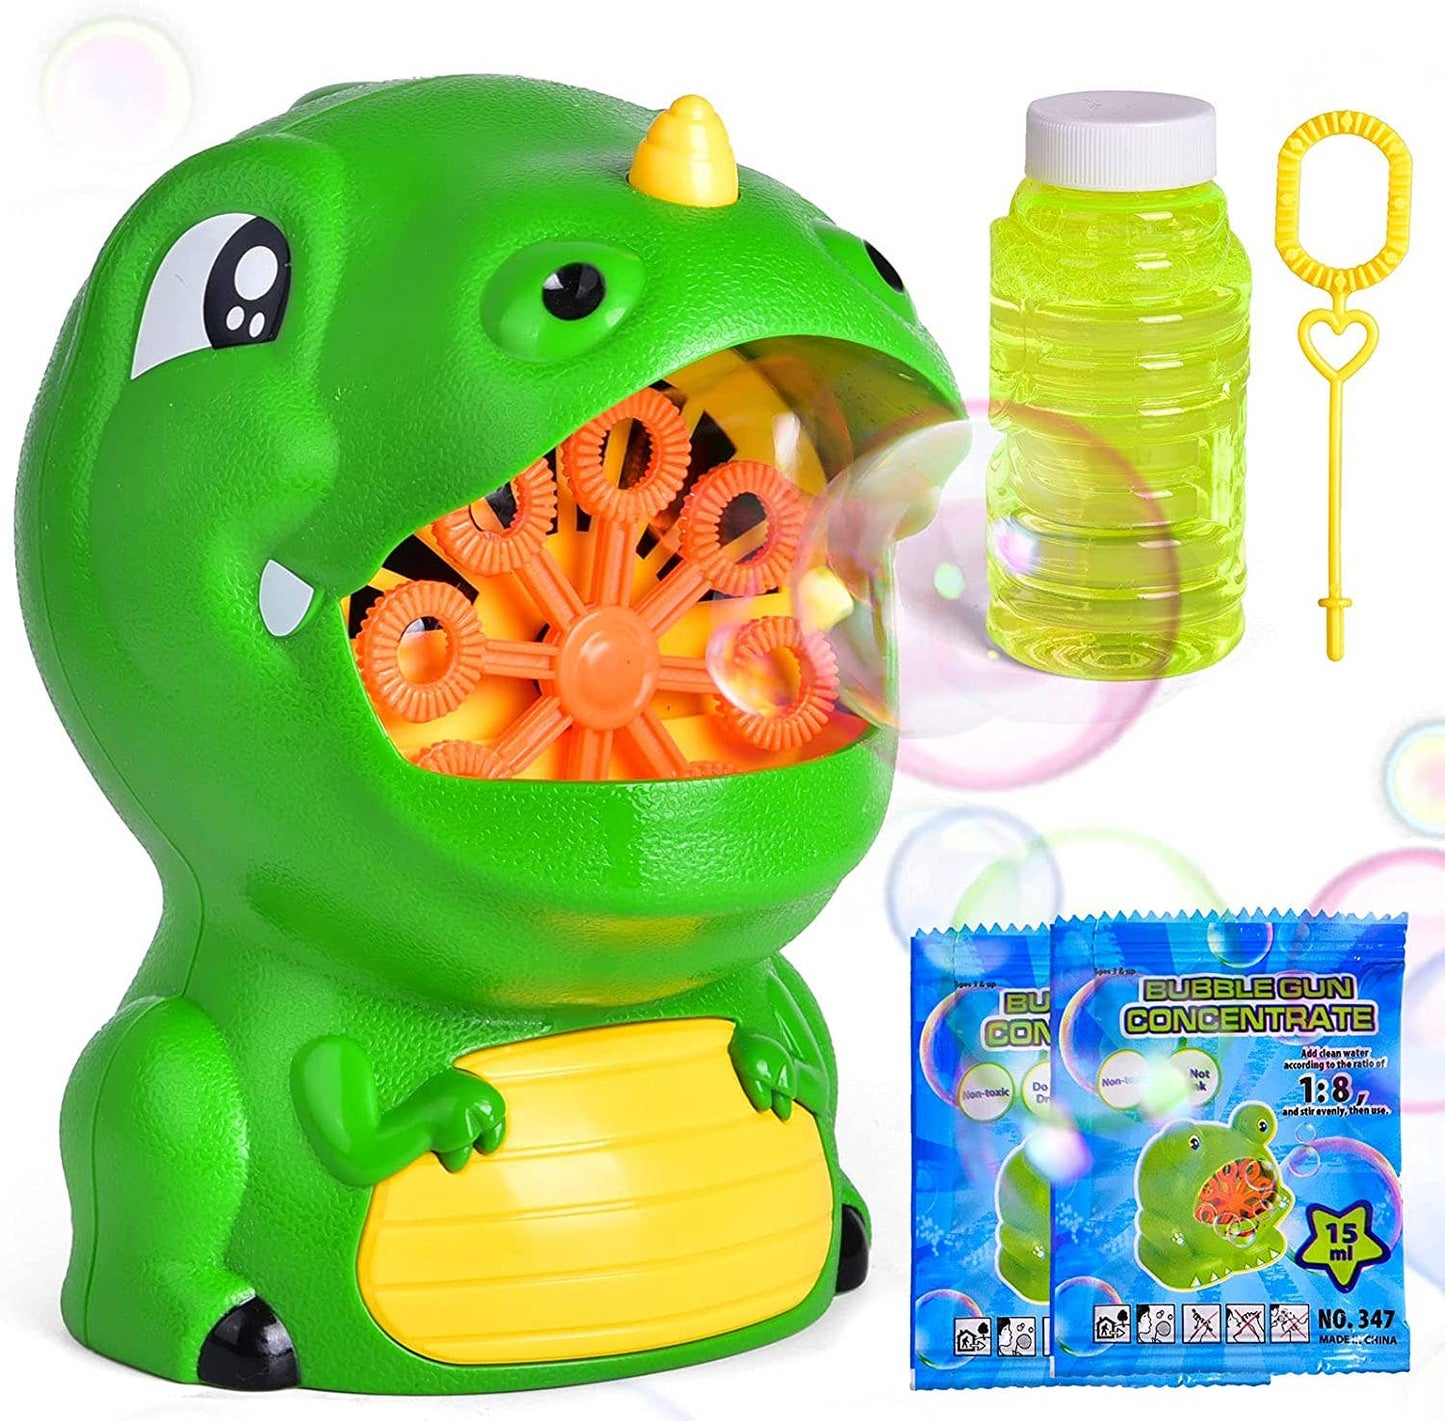 Fun Little Toys - Bubble Machine Automatic Bubble Blower with Bubble Solutions